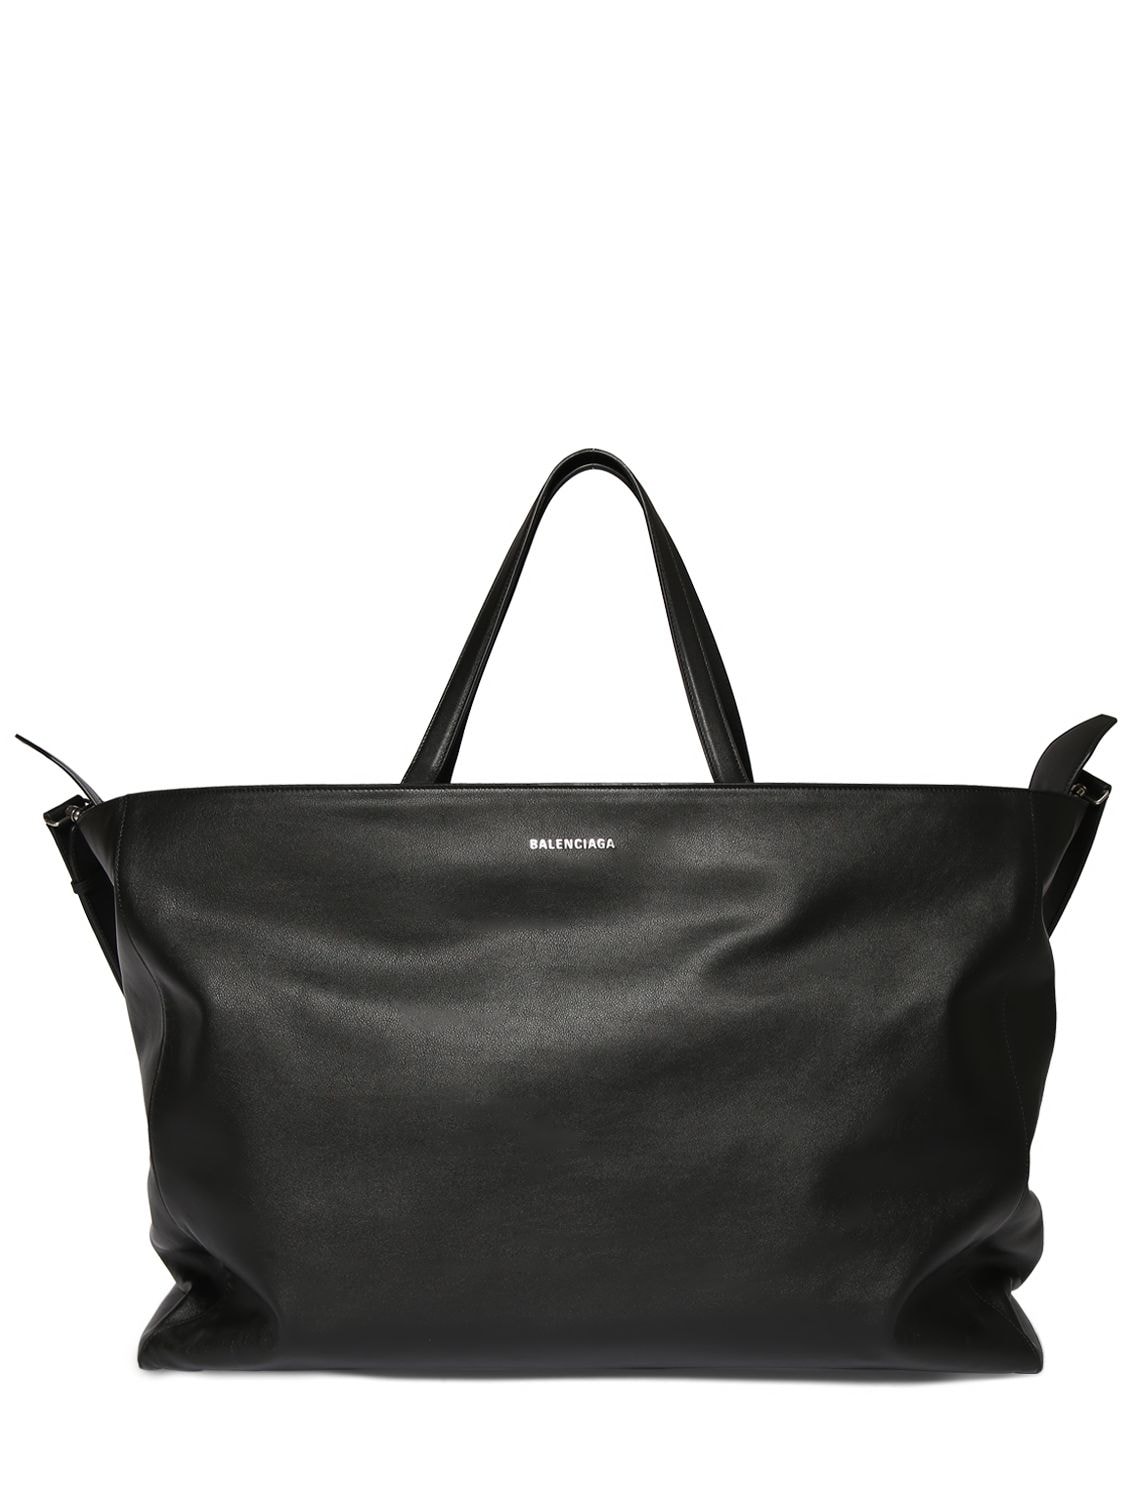 Balenciaga Xl Carryall Leather Tote Bag In Black